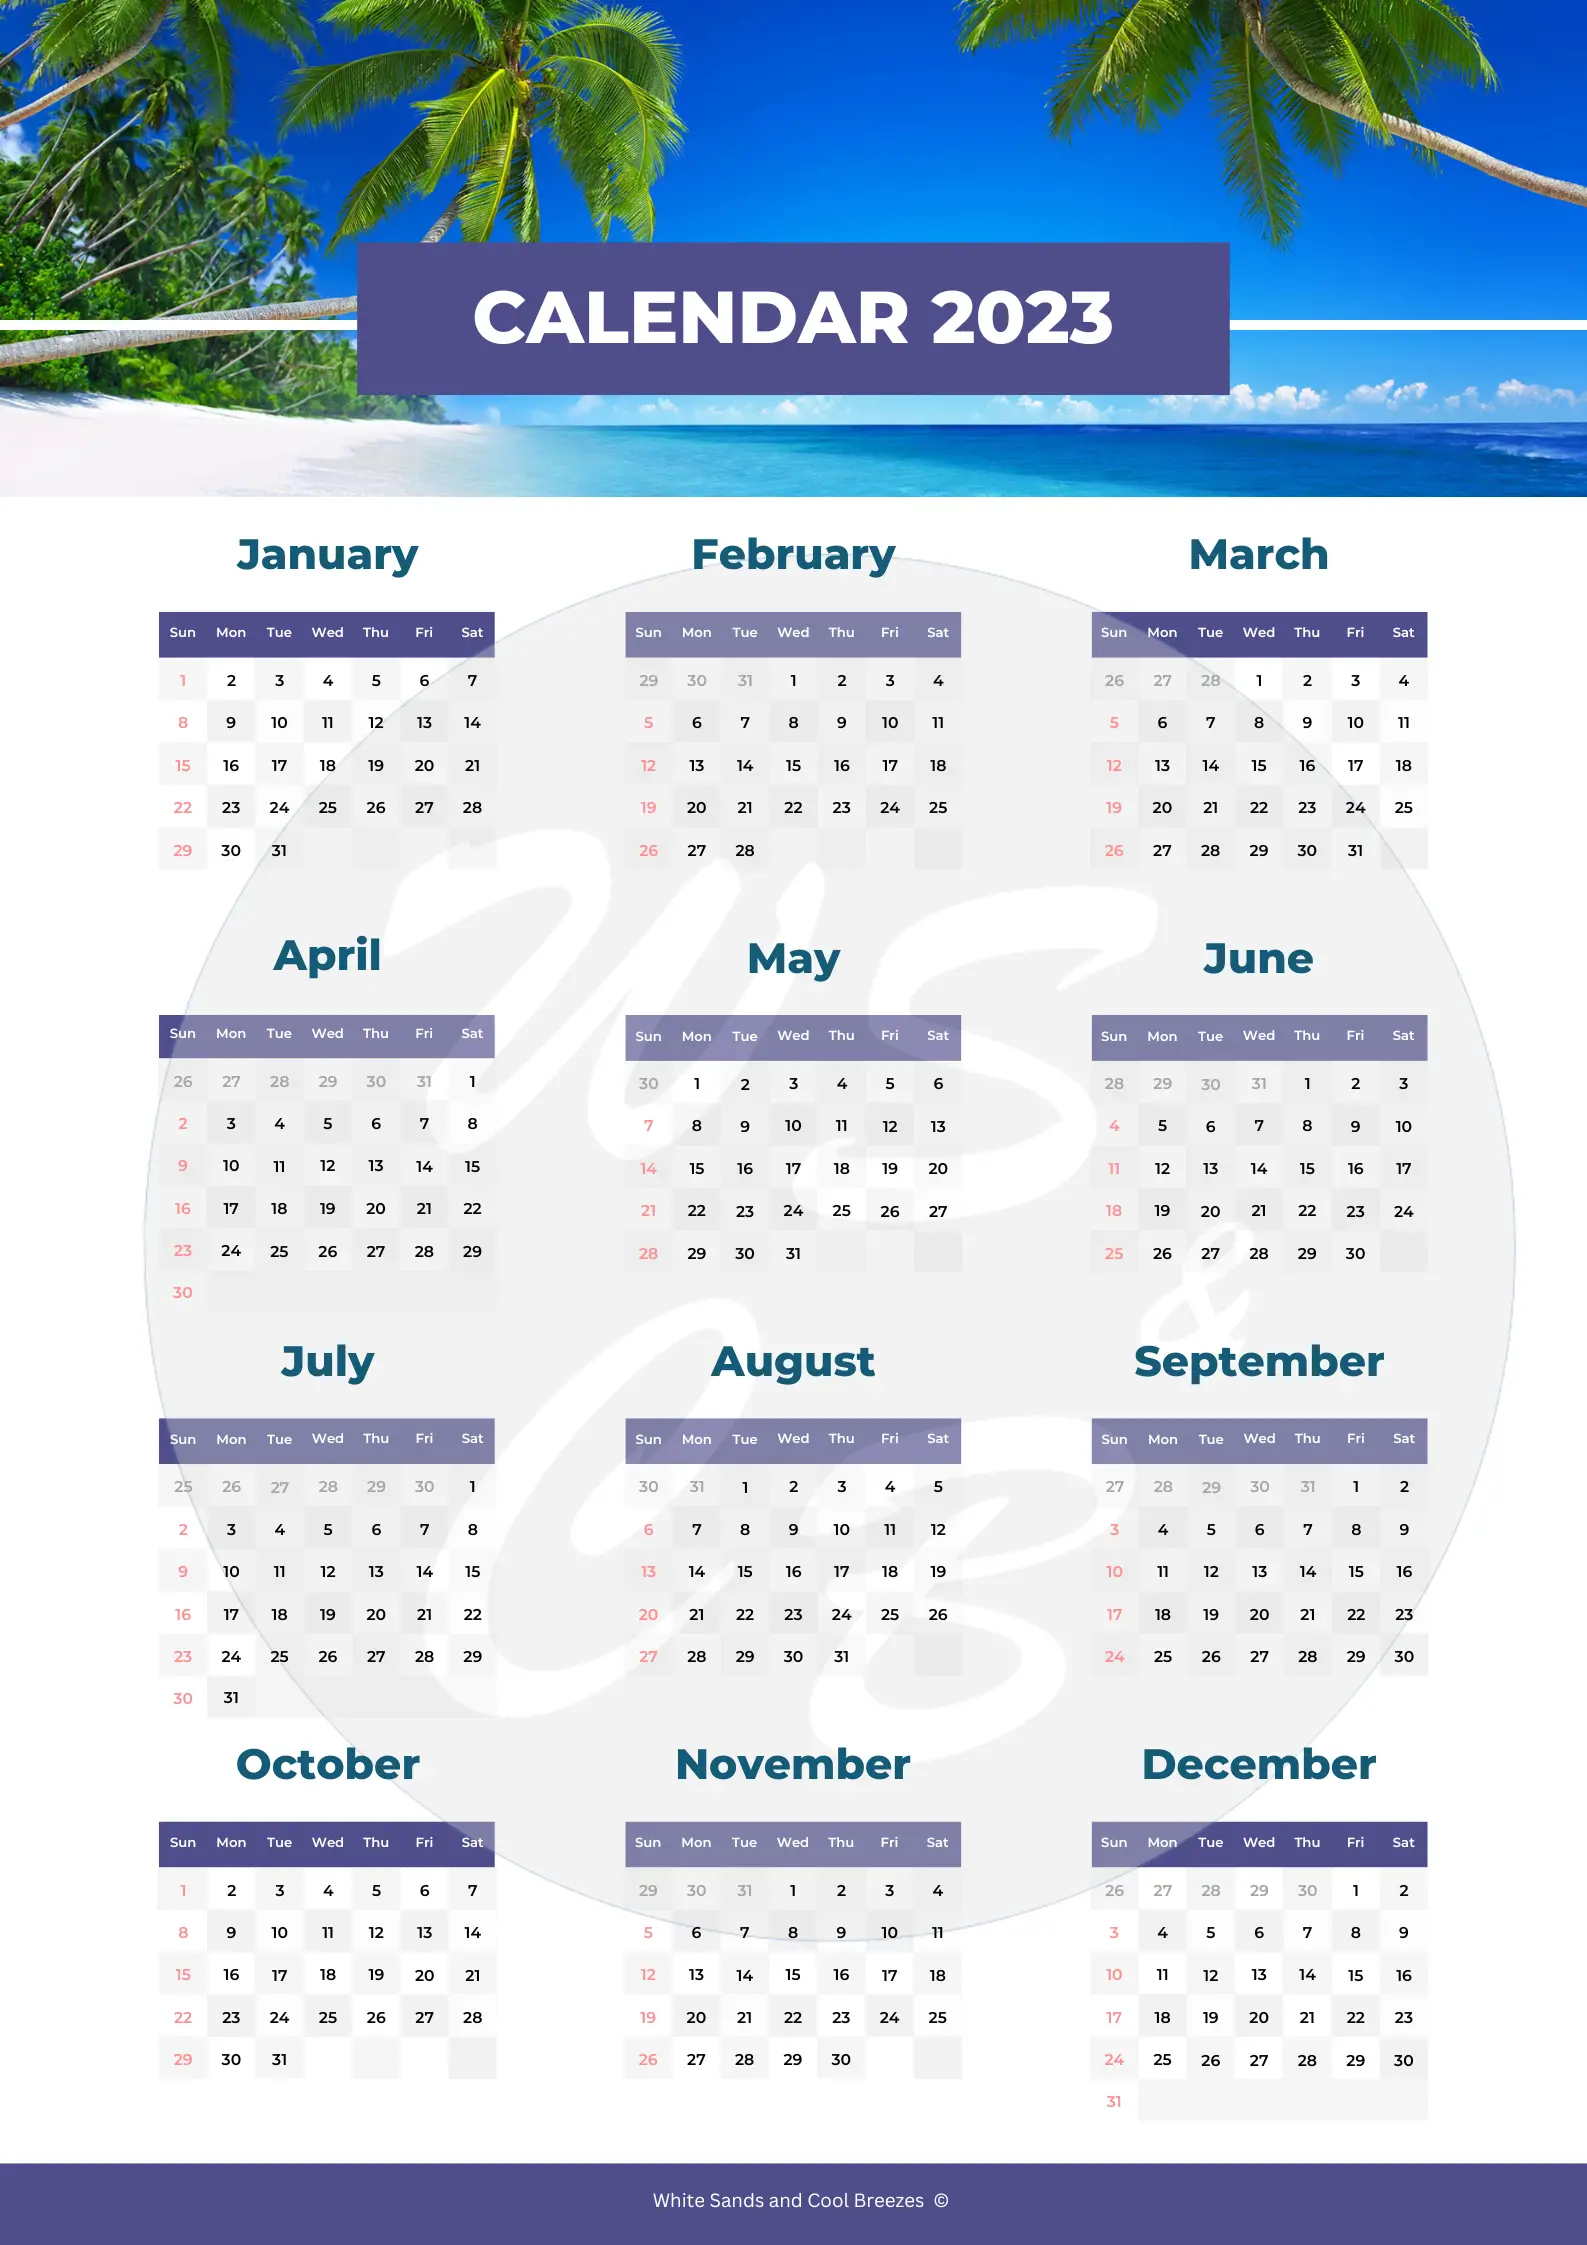 2023 Beach Calendar White Sands and Cool Breezes